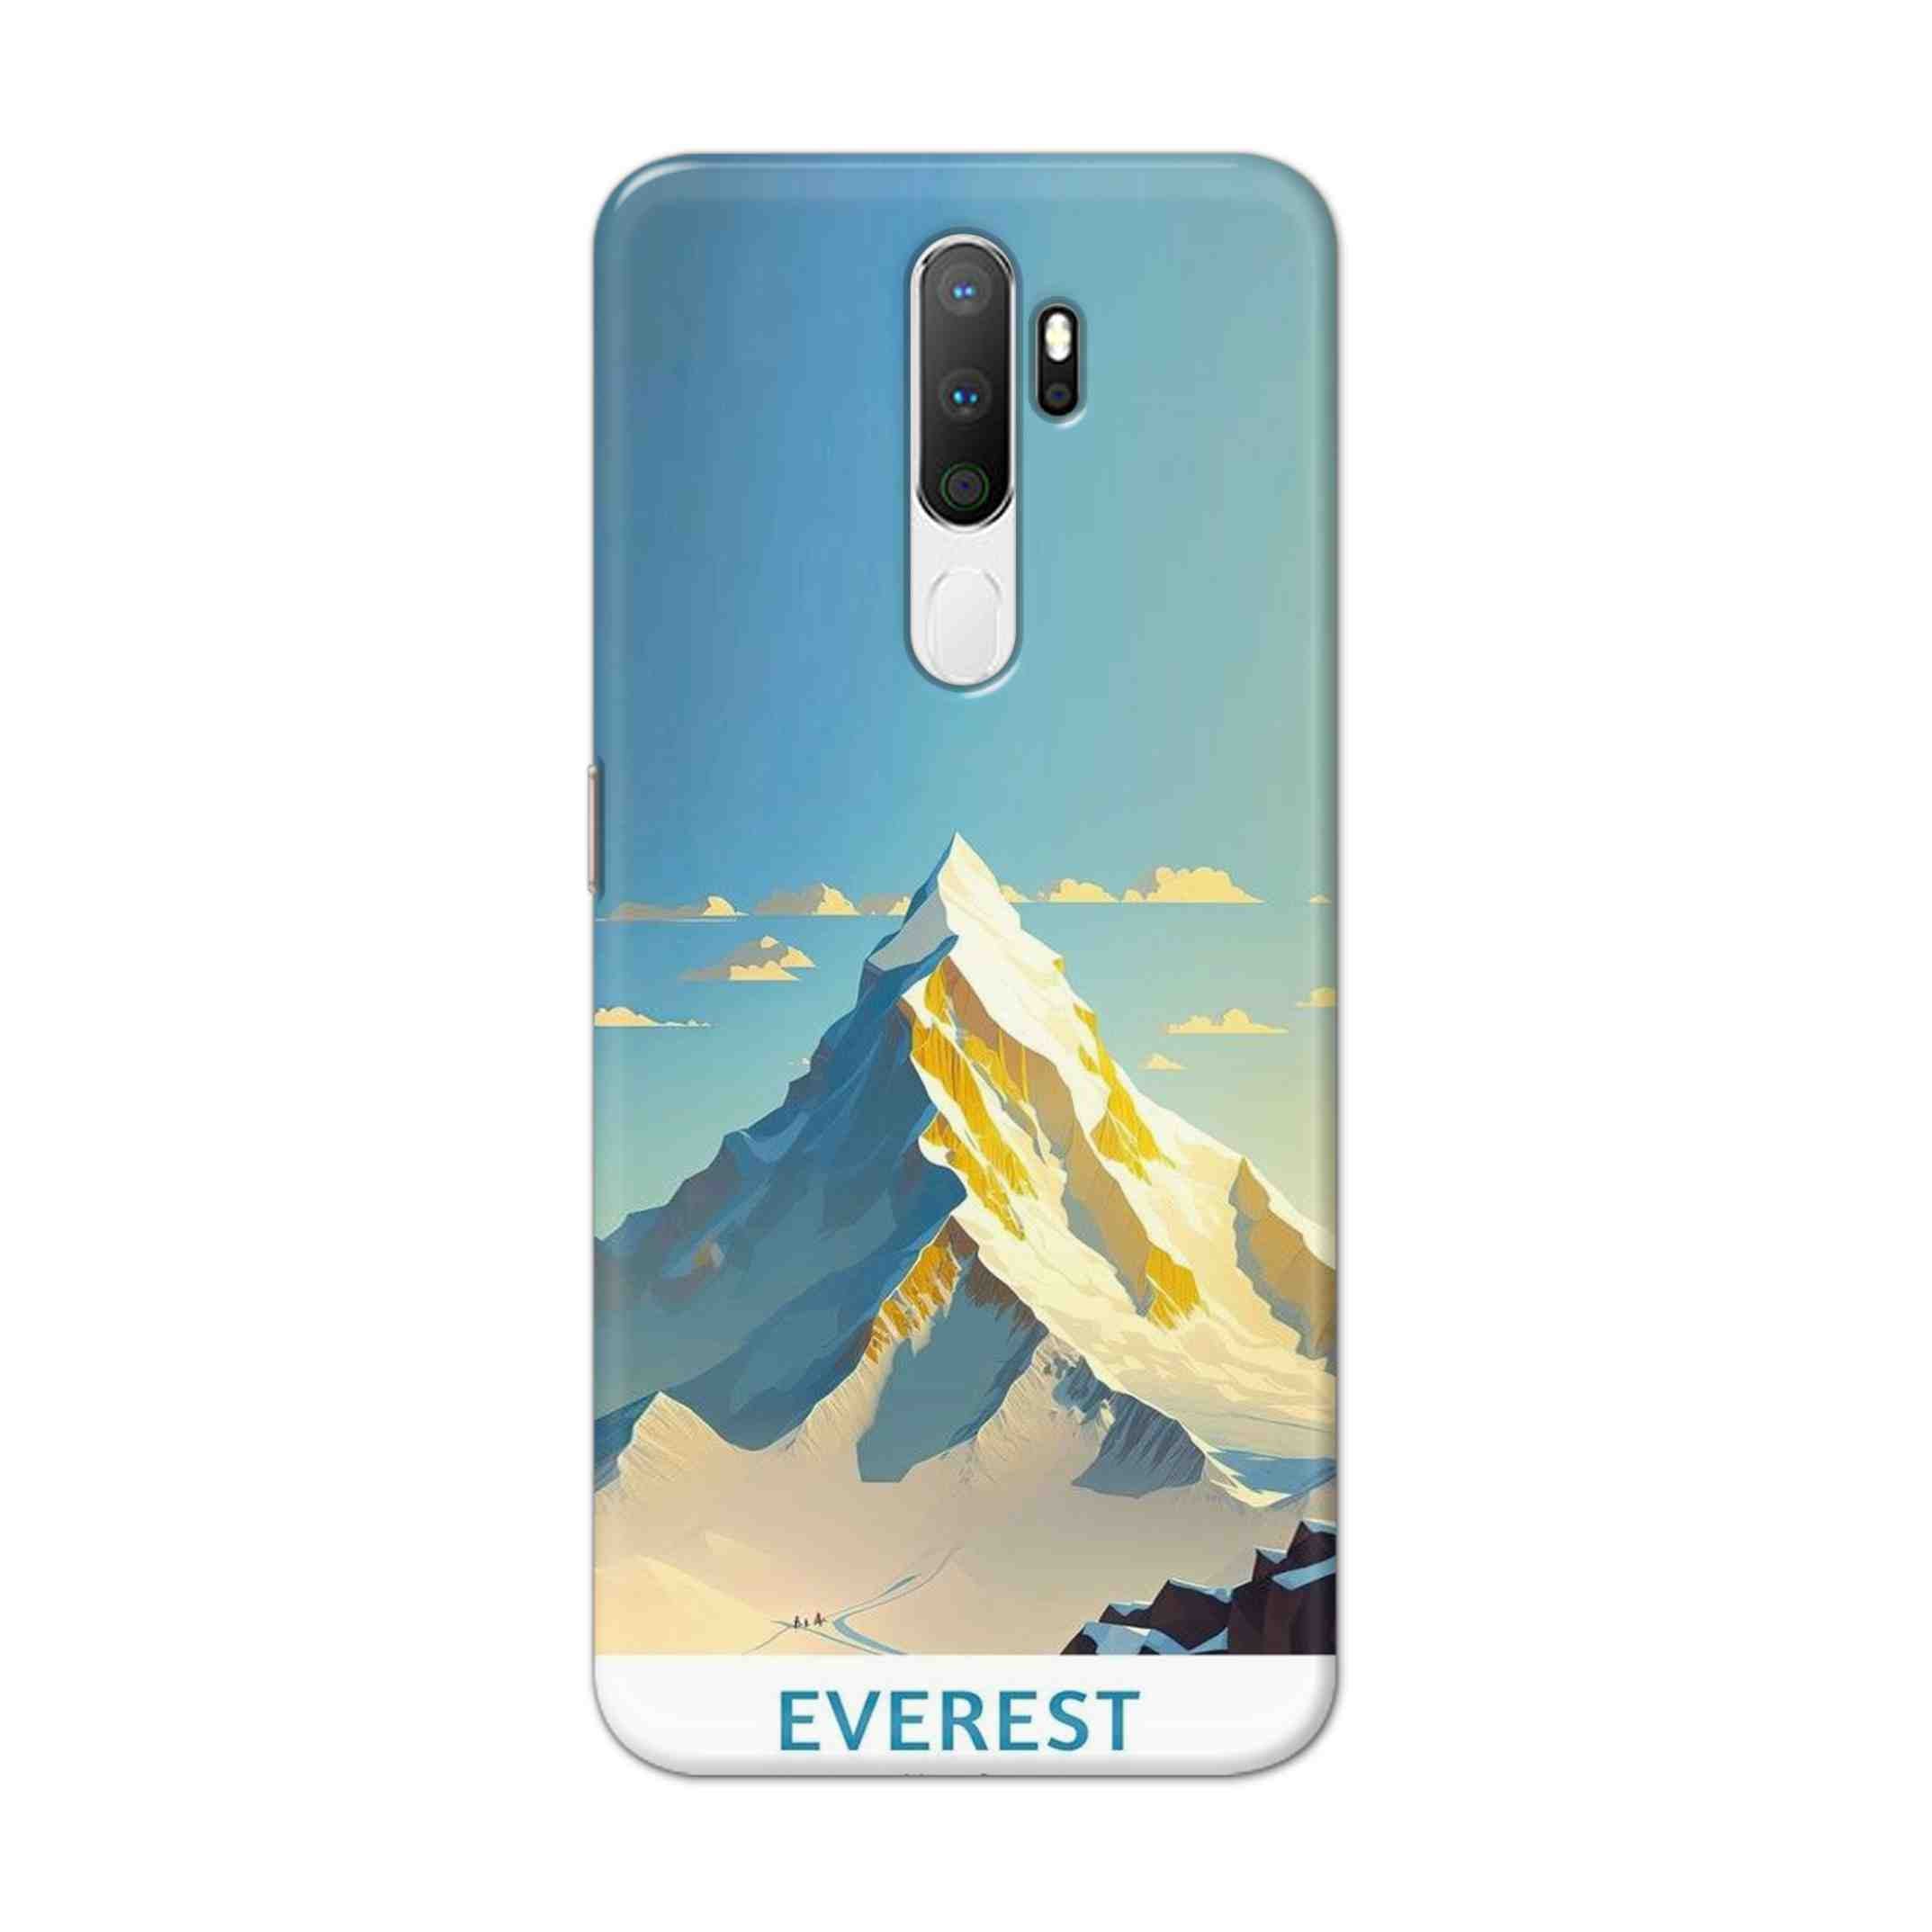 Buy Everest Hard Back Mobile Phone Case Cover For Oppo A5 (2020) Online